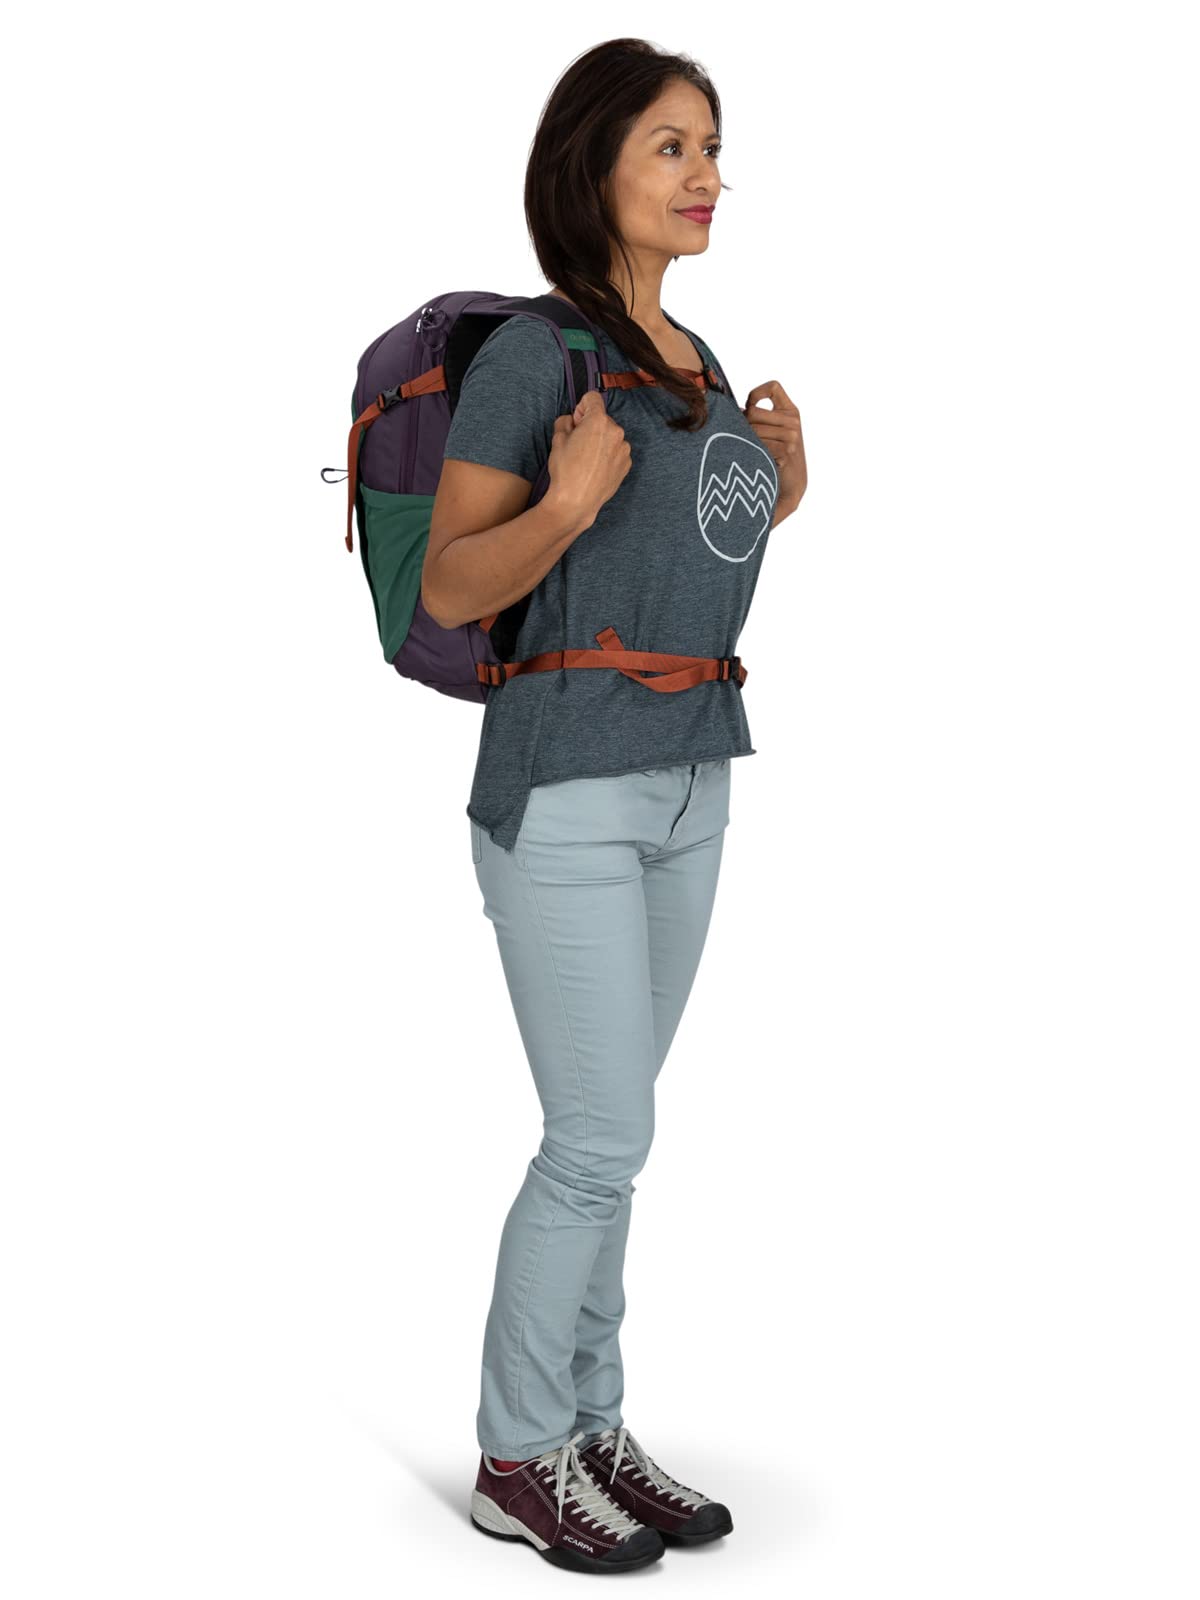 Osprey Daylite® Plus Backpacks - Backpacks with Logo - Q528422 QI